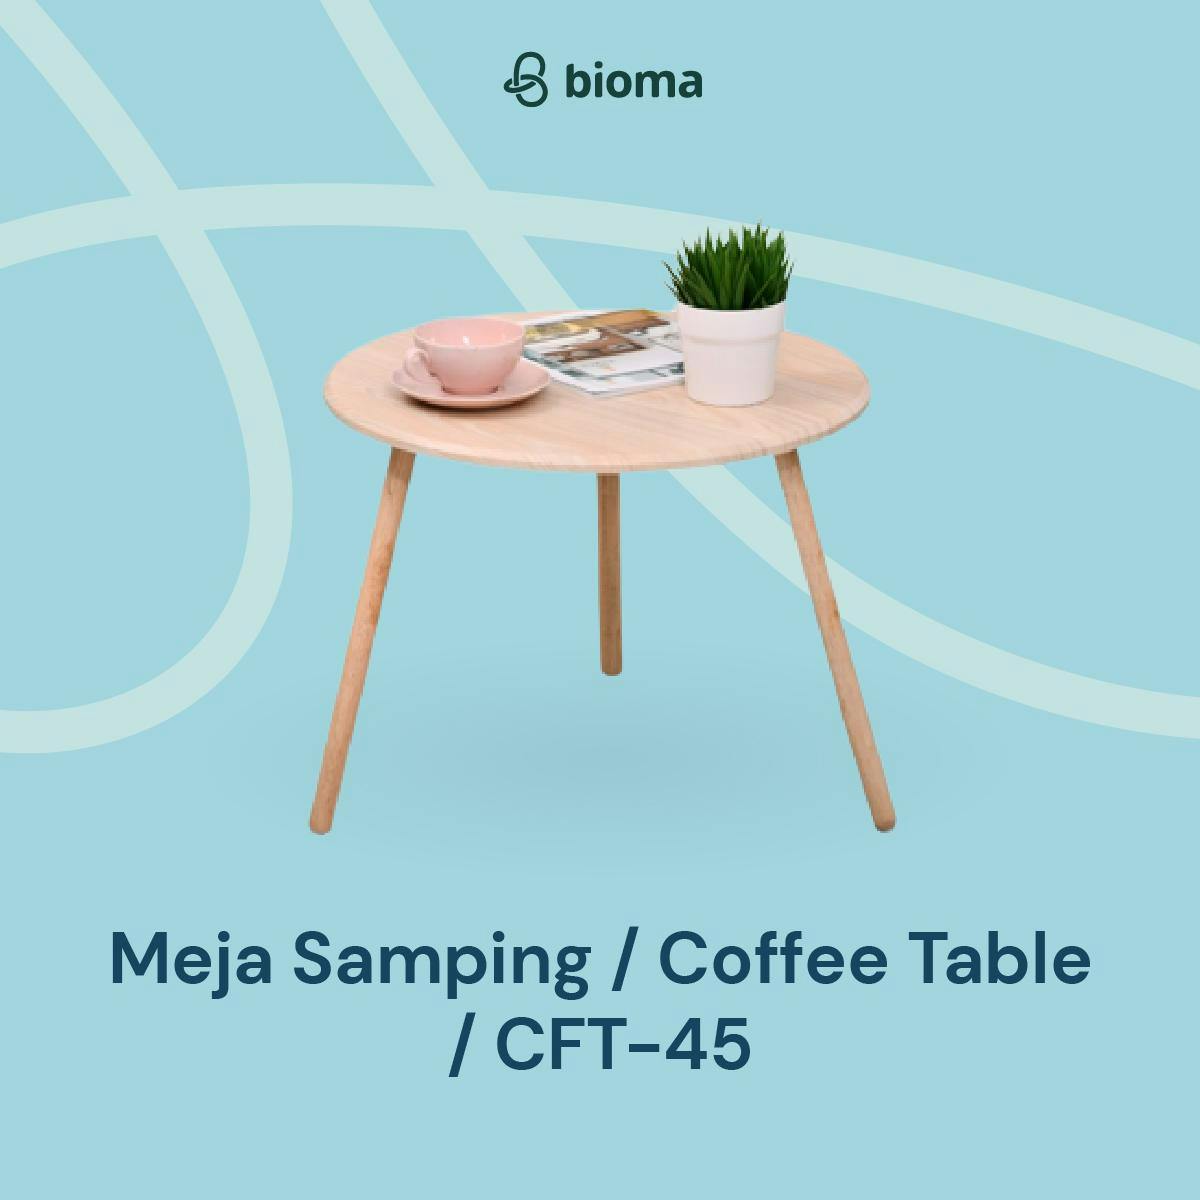 Meja Samping / Coffee Table / CFT-45